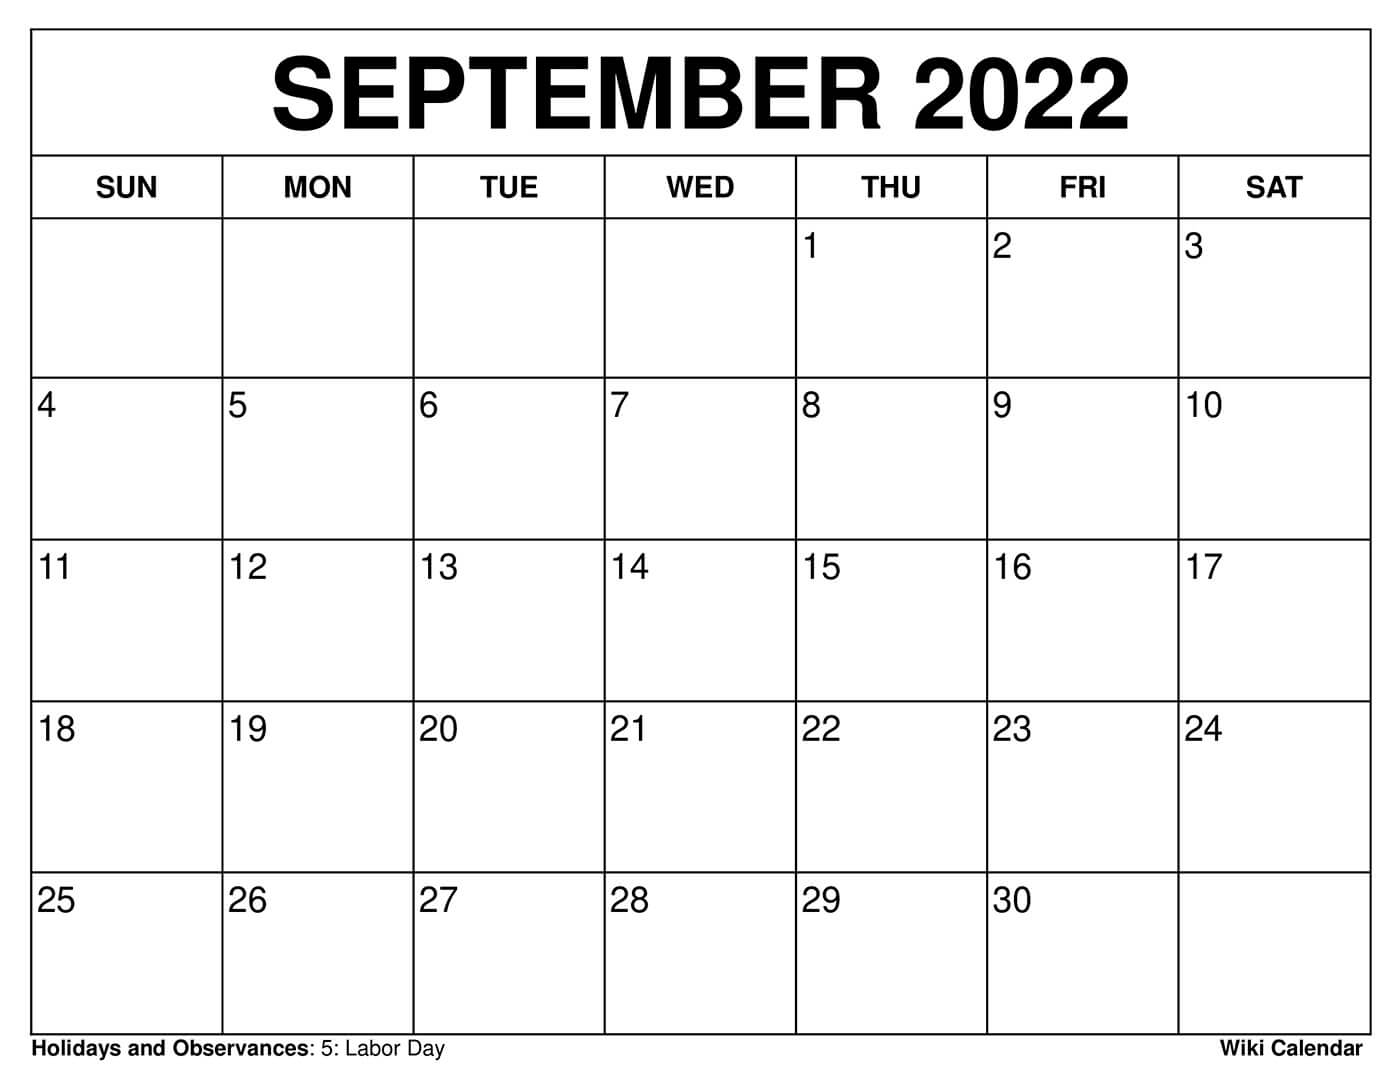 September 2022 Calendar Pdf Free Printable September 2022 Calendars - Wiki Calendar